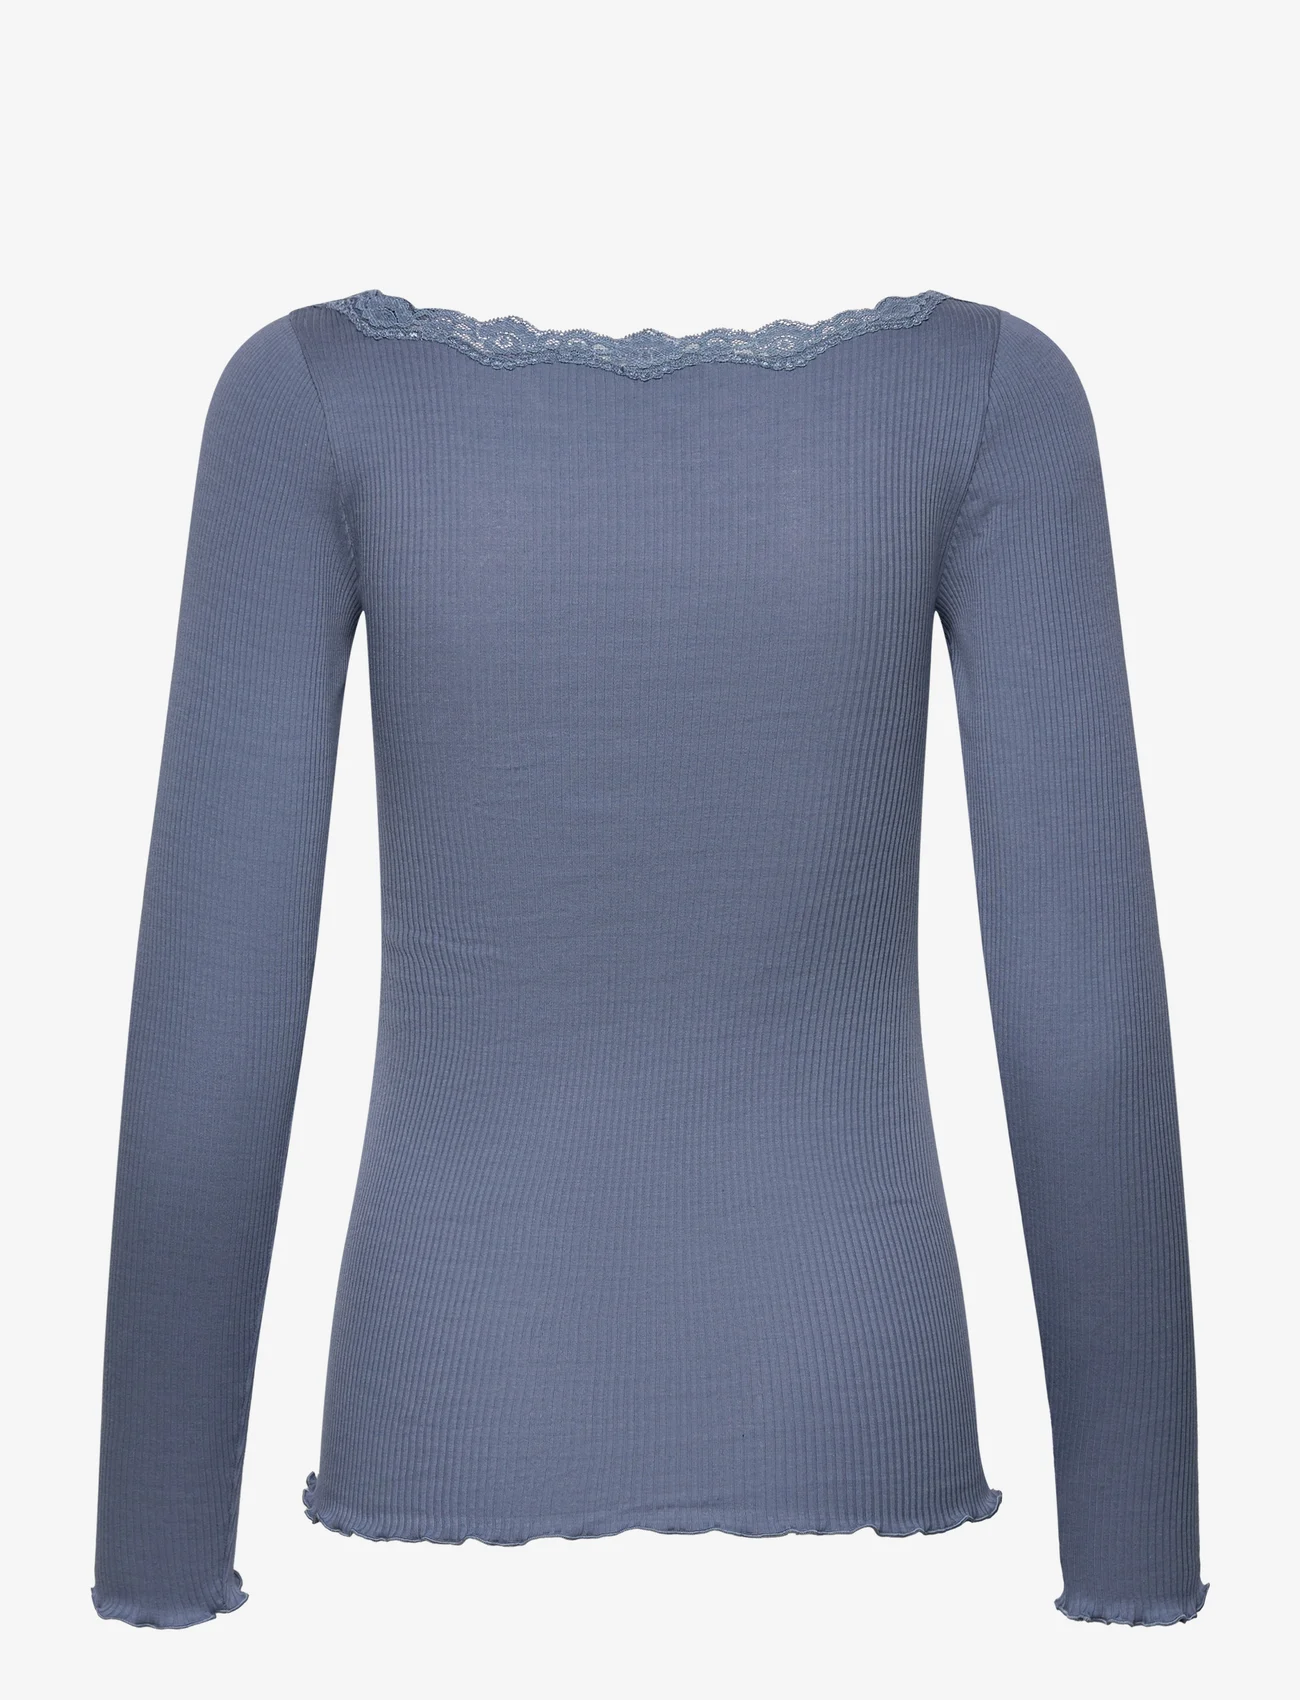 Rosemunde - Organic t-shirt w/lace - pitkähihaiset t-paidat - paris blue - 1